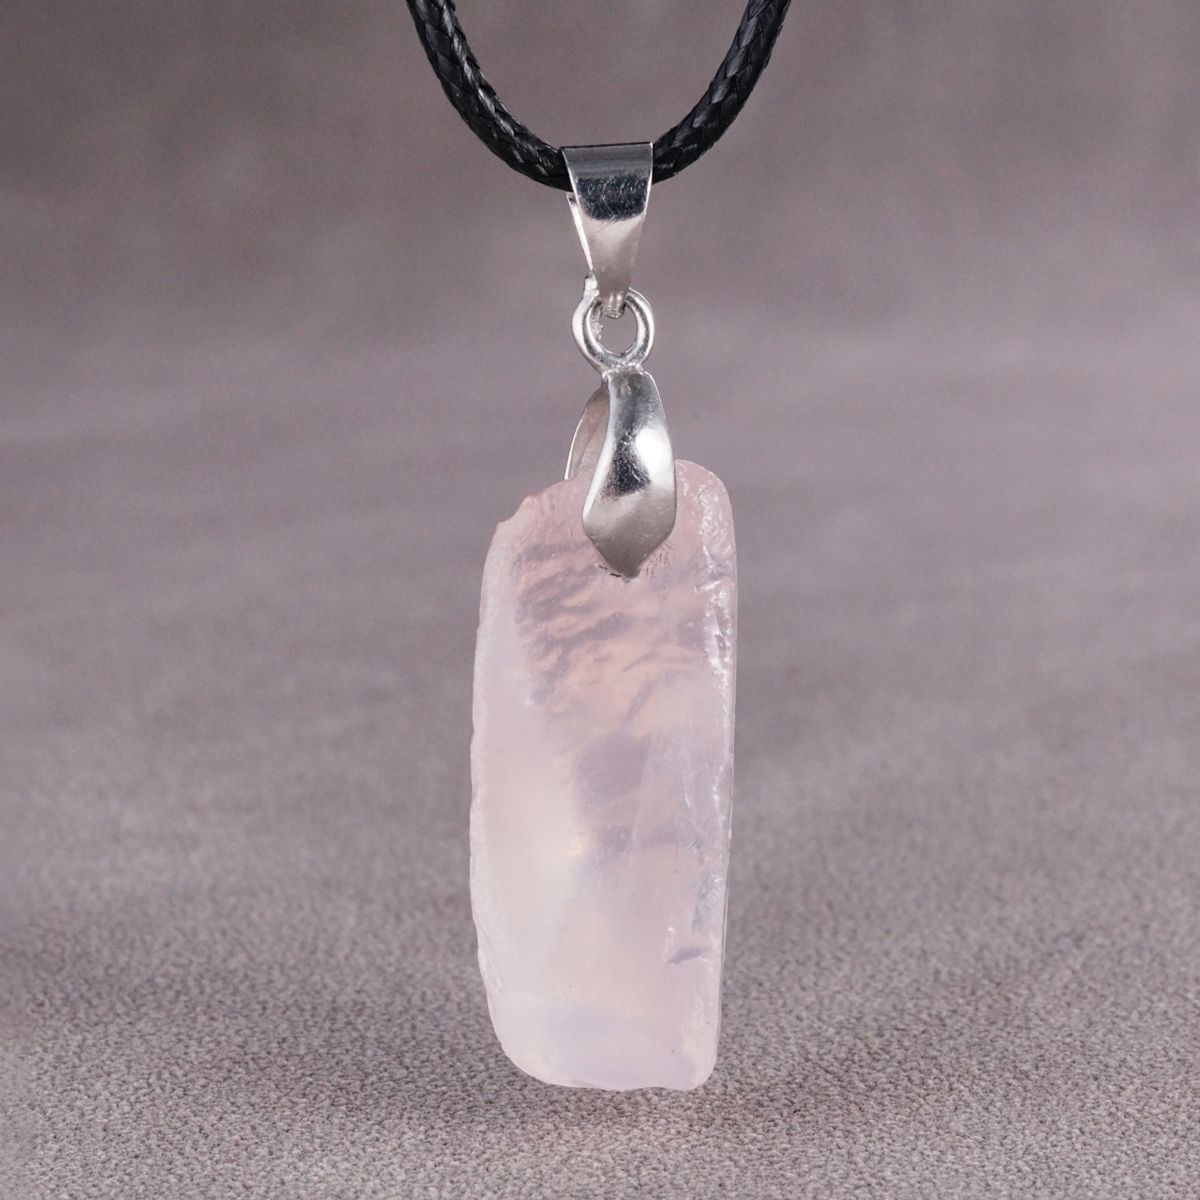 Gemstone Necklace Pendant